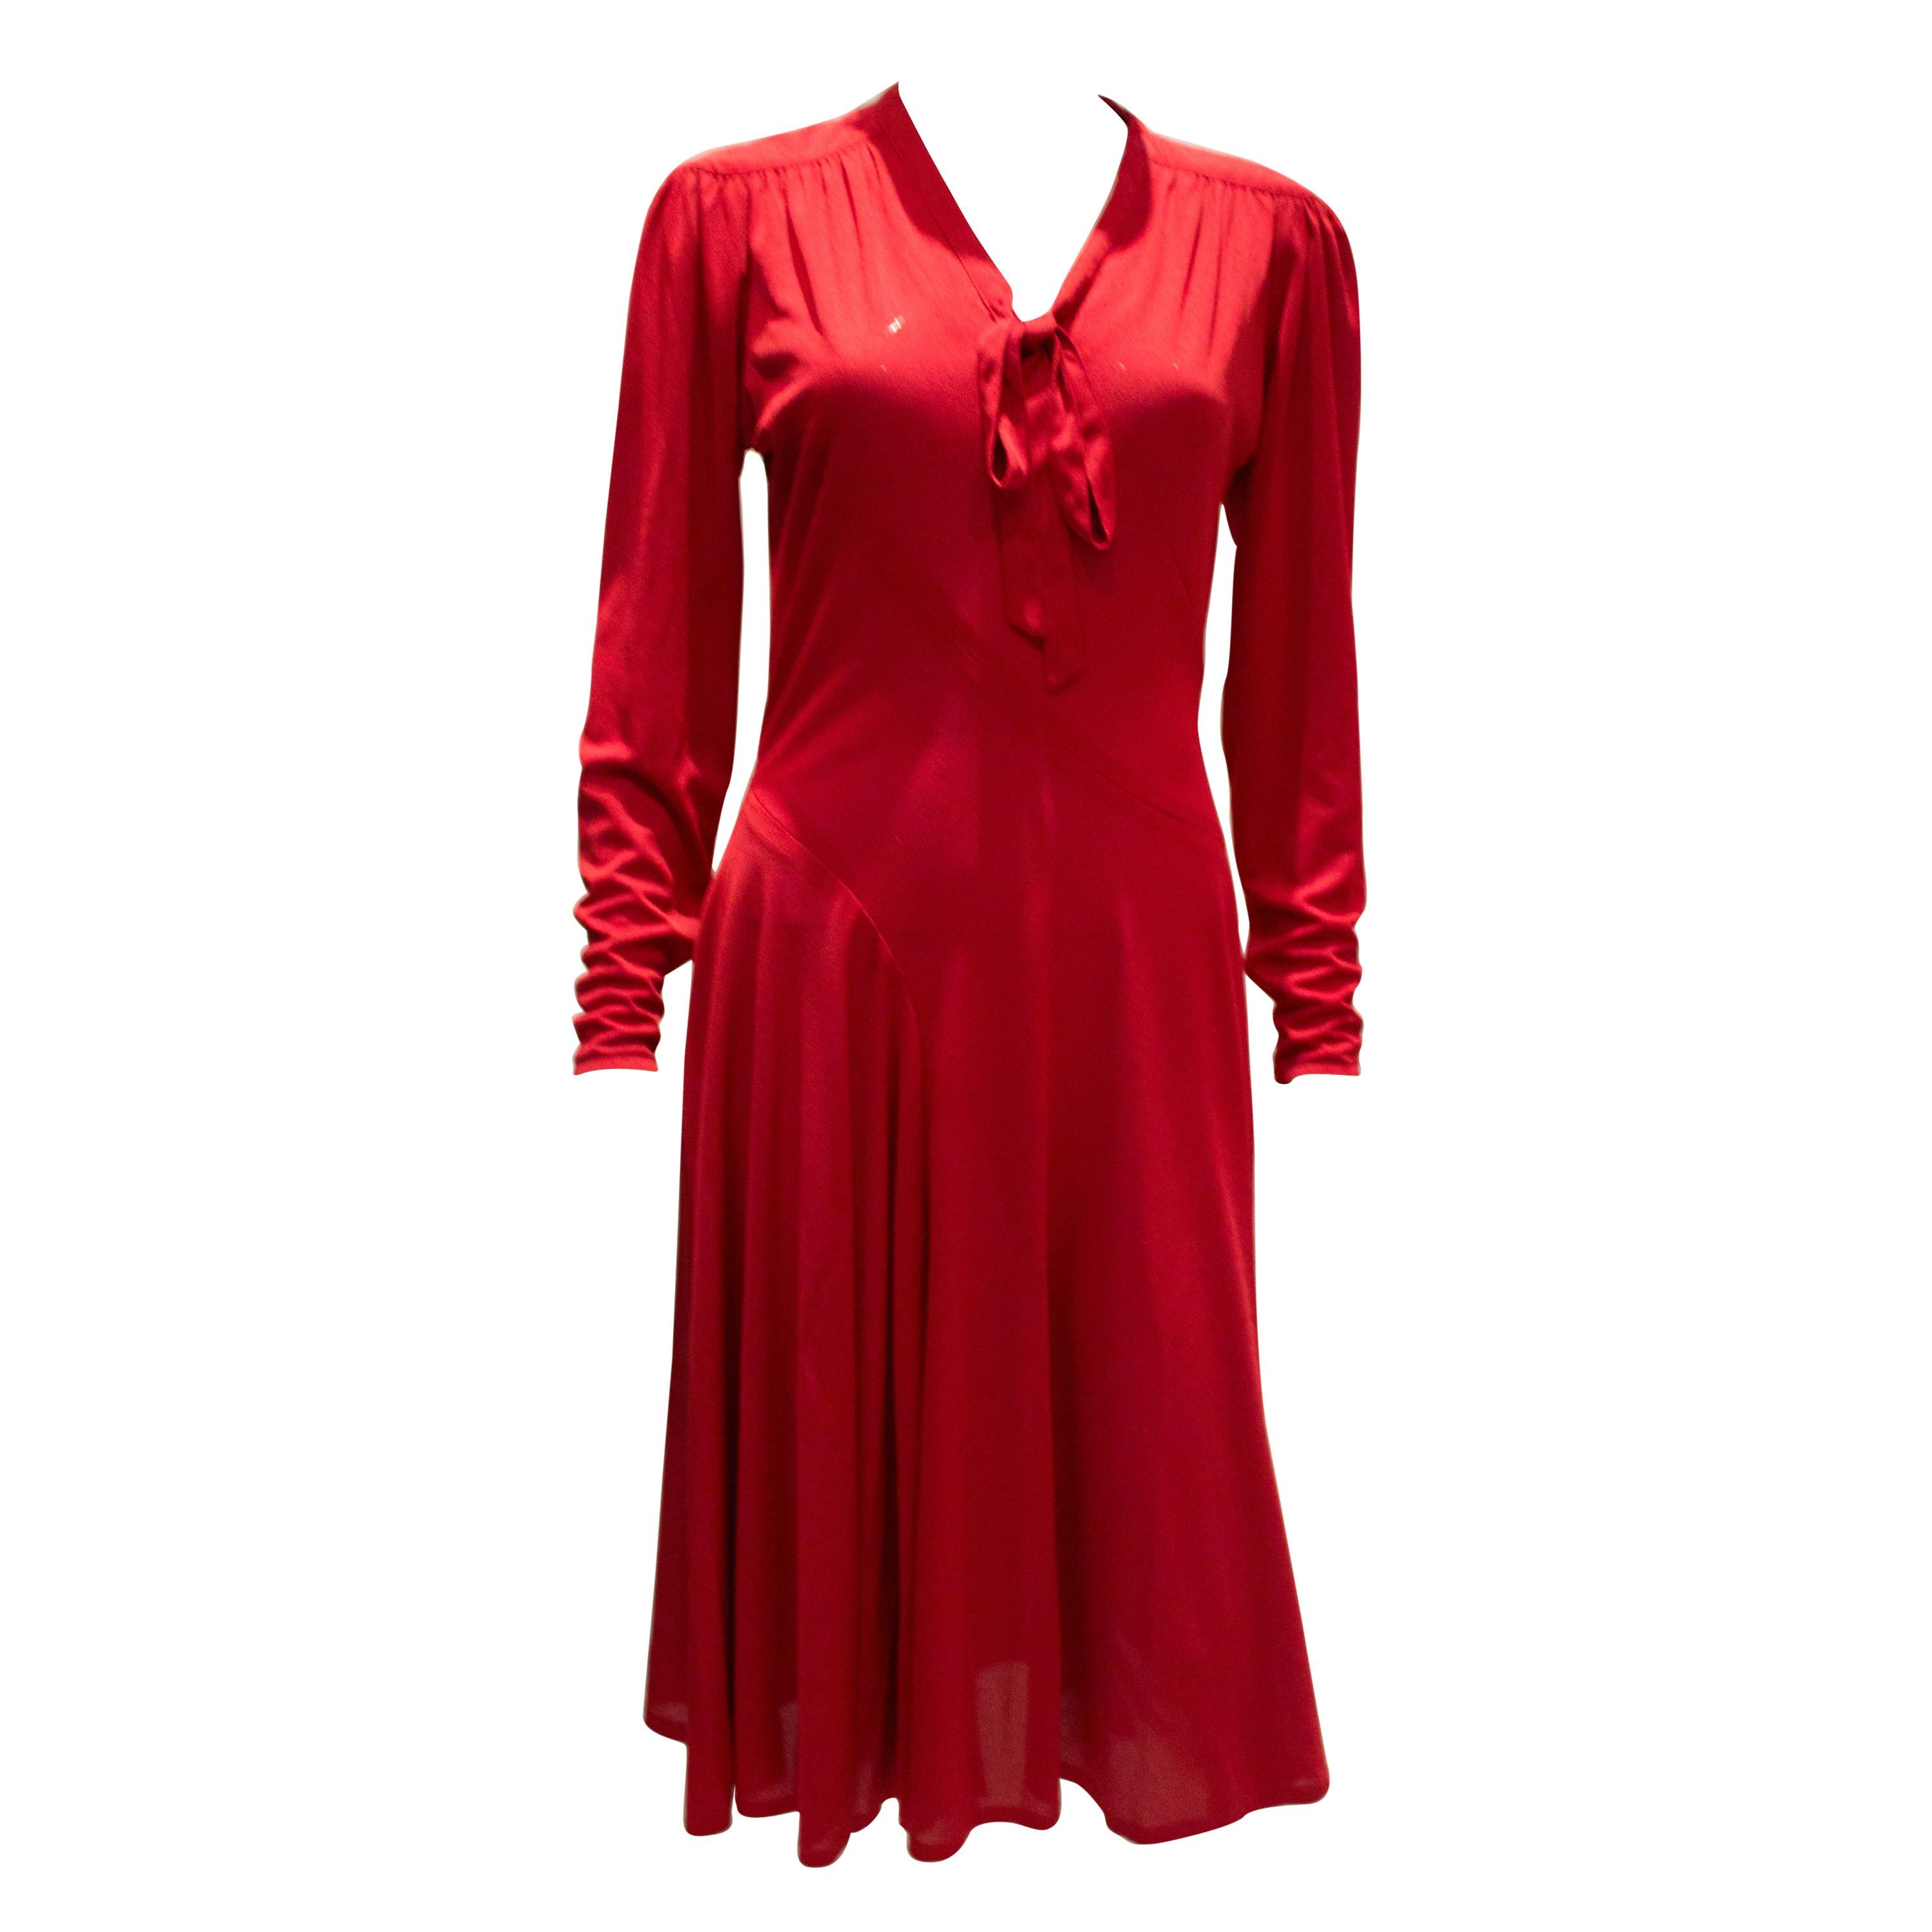 Vintage Jerseymasters Red Dress For Sale